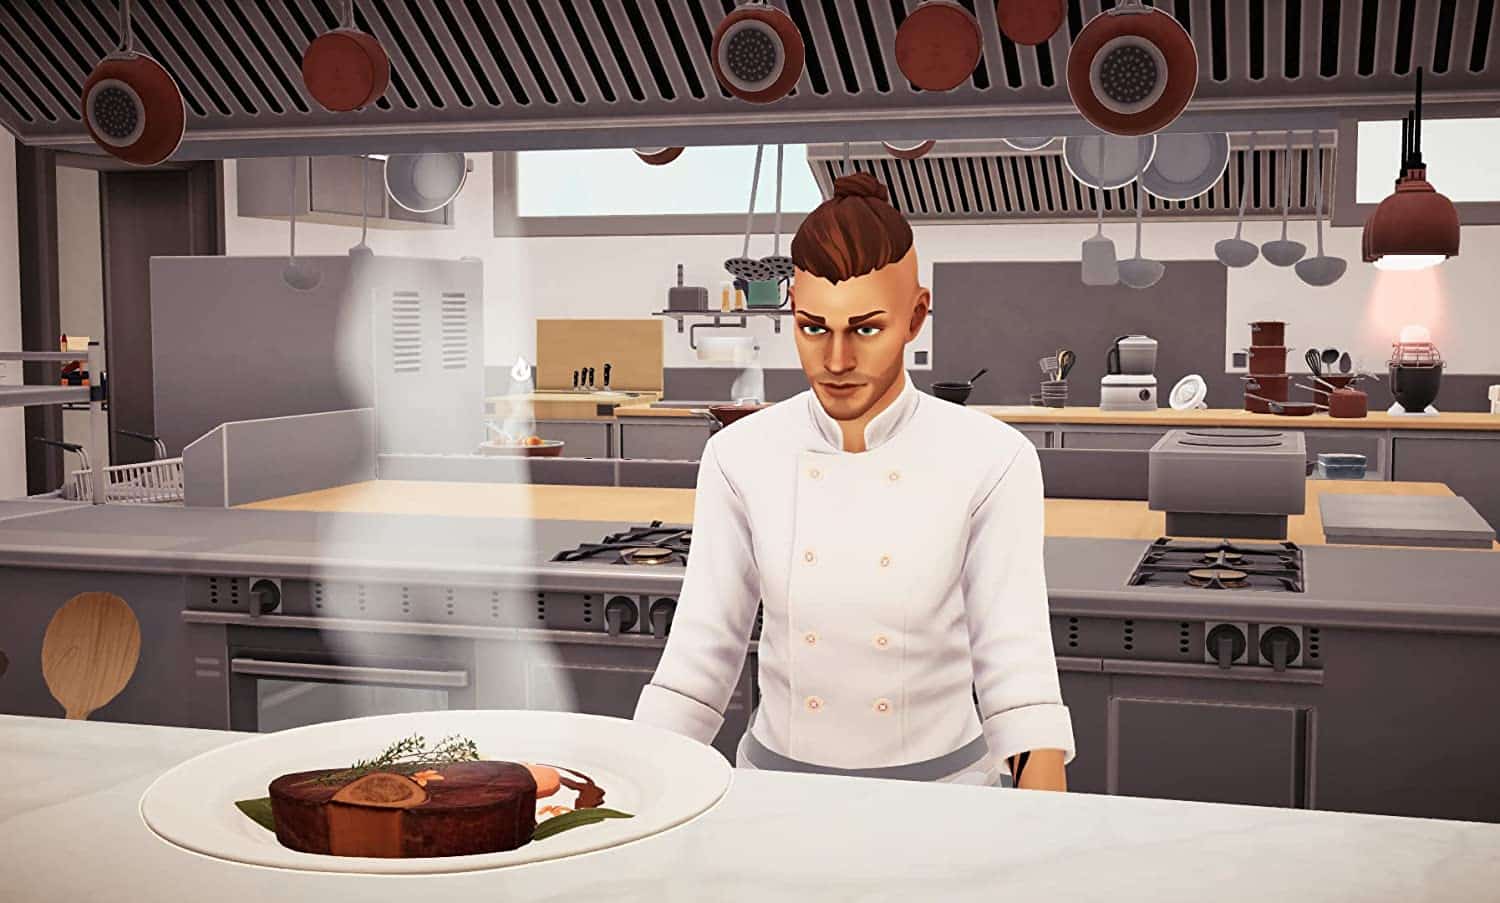 Chef's Life Chef Life A Restaurant Simulator